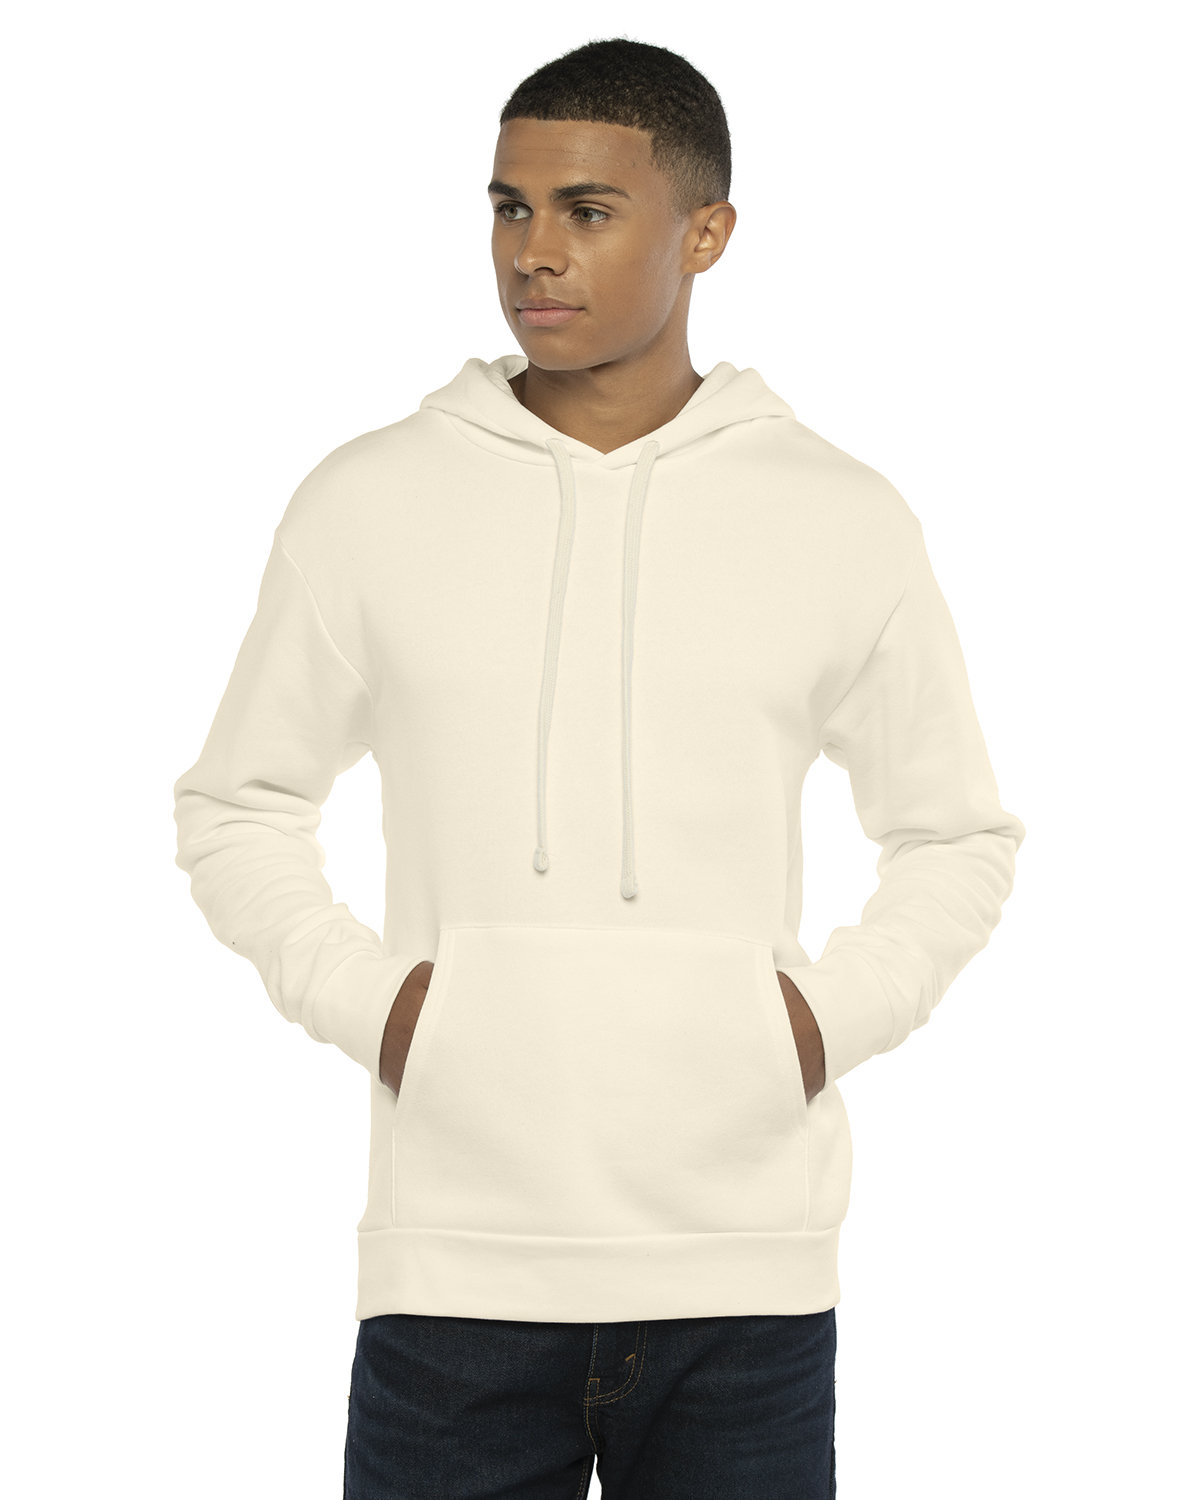 Next Level Apparel Unisex Santa Cruz Pullover Hooded Sweatshirt